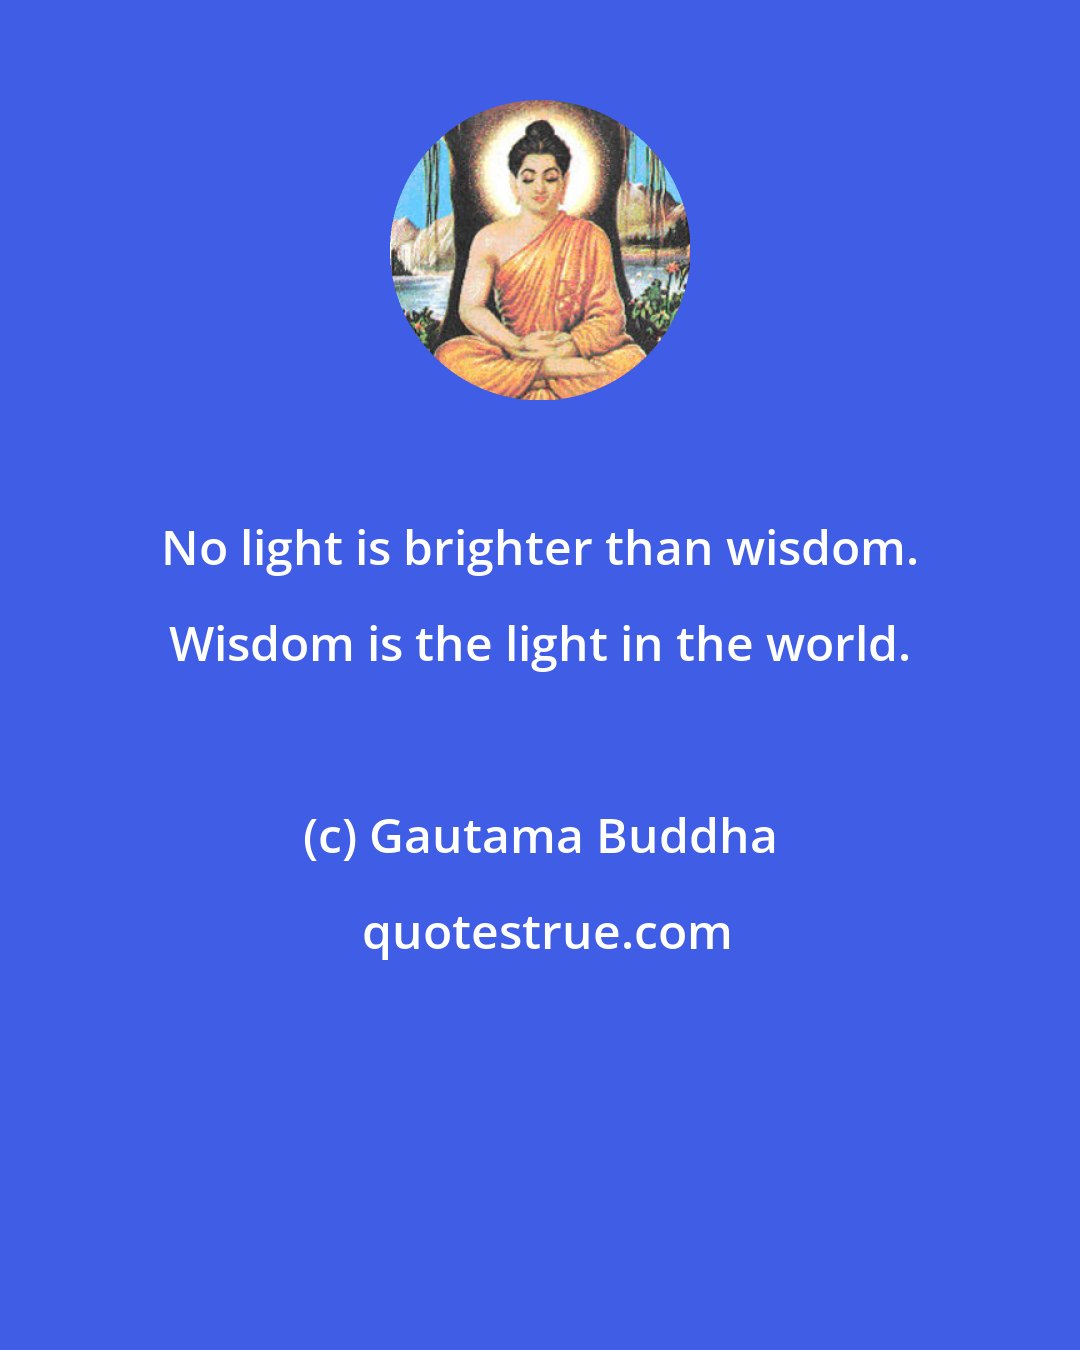 Gautama Buddha: No light is brighter than wisdom. Wisdom is the light in the world.